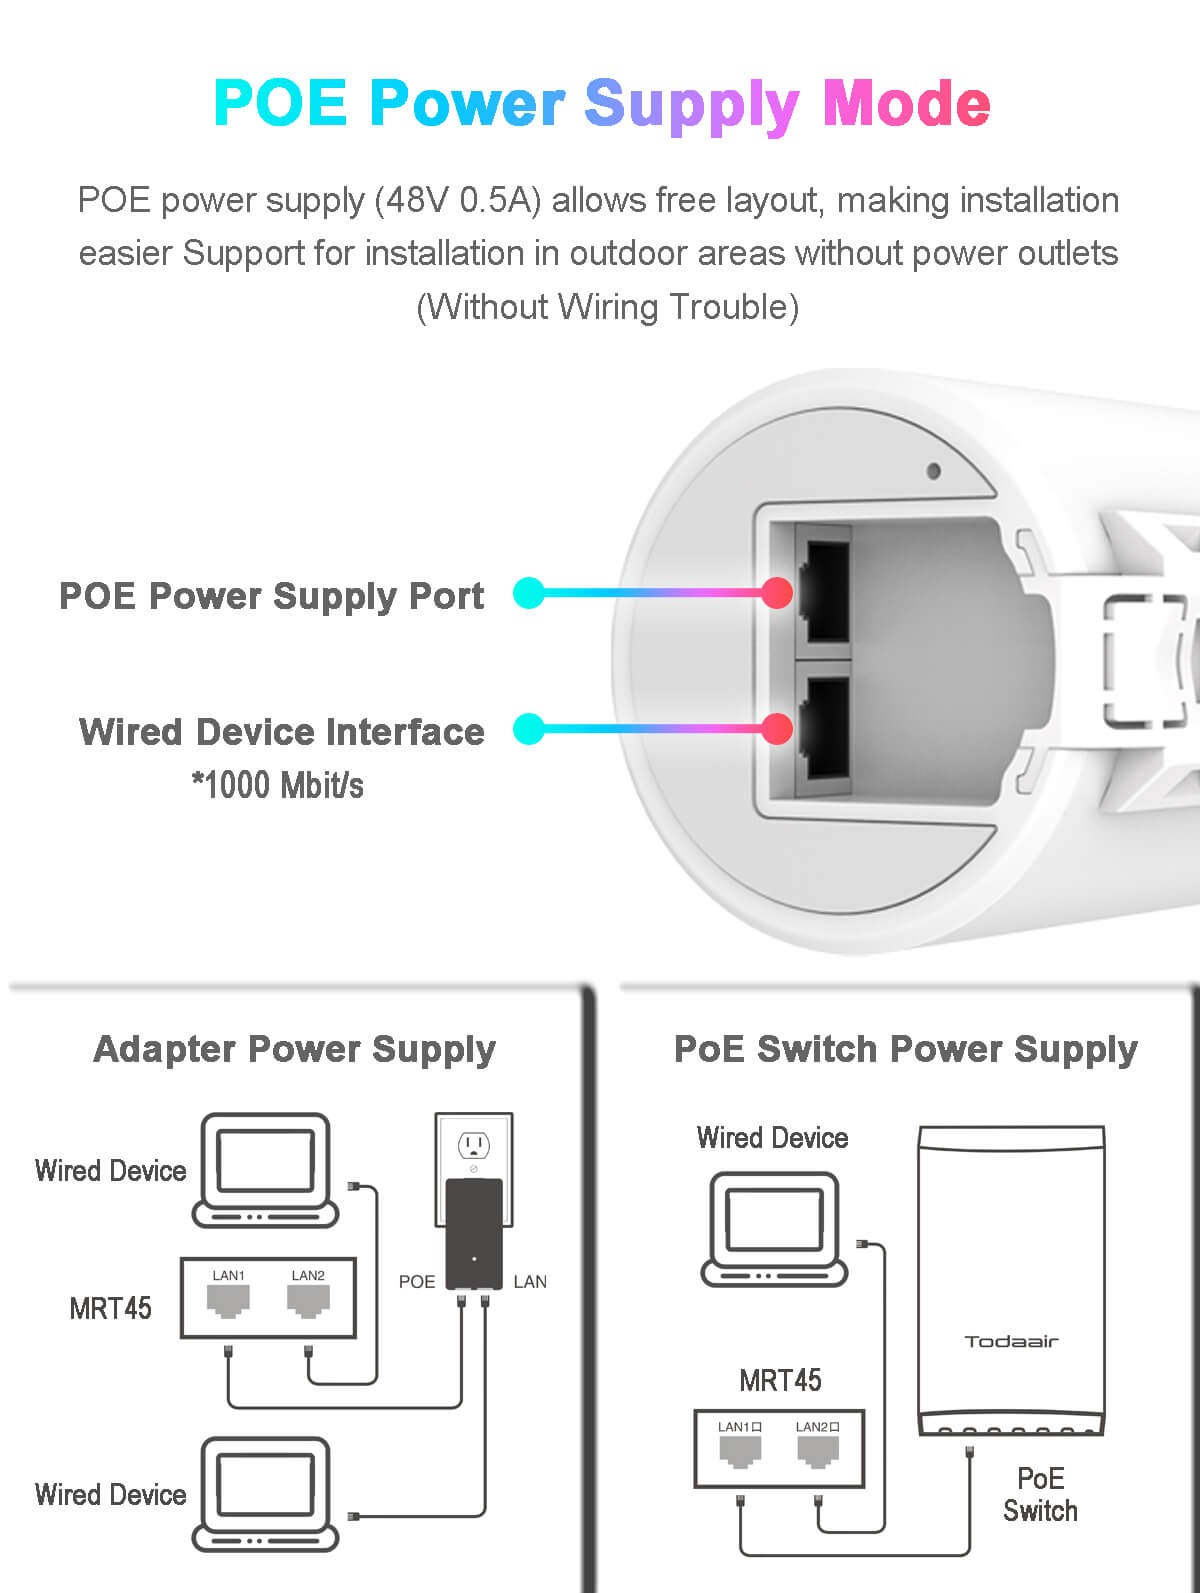 POE power supply